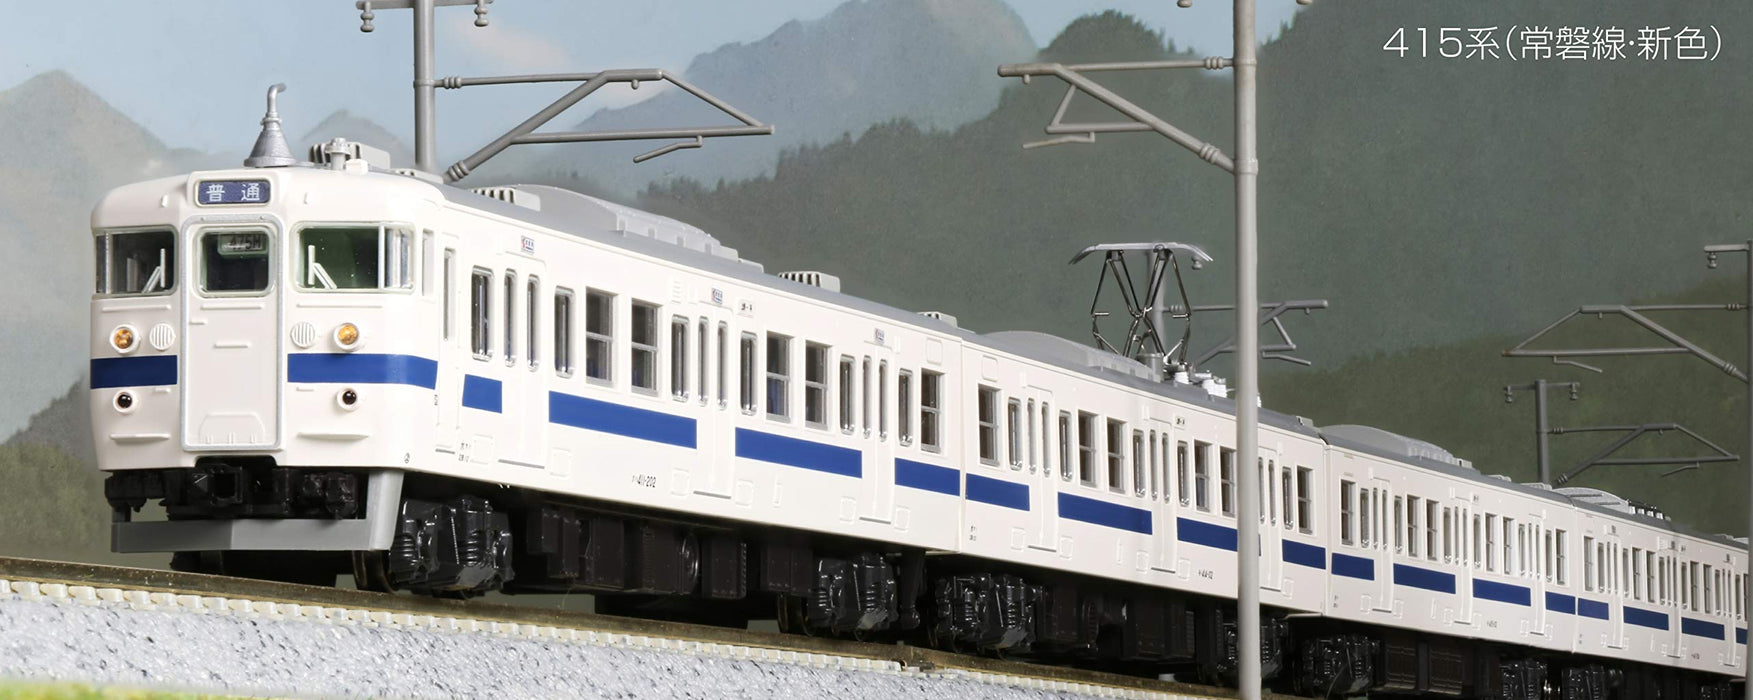 Kato N Gauge 415 Series Railway Model Train - Joban Line New Color 7-Car Set